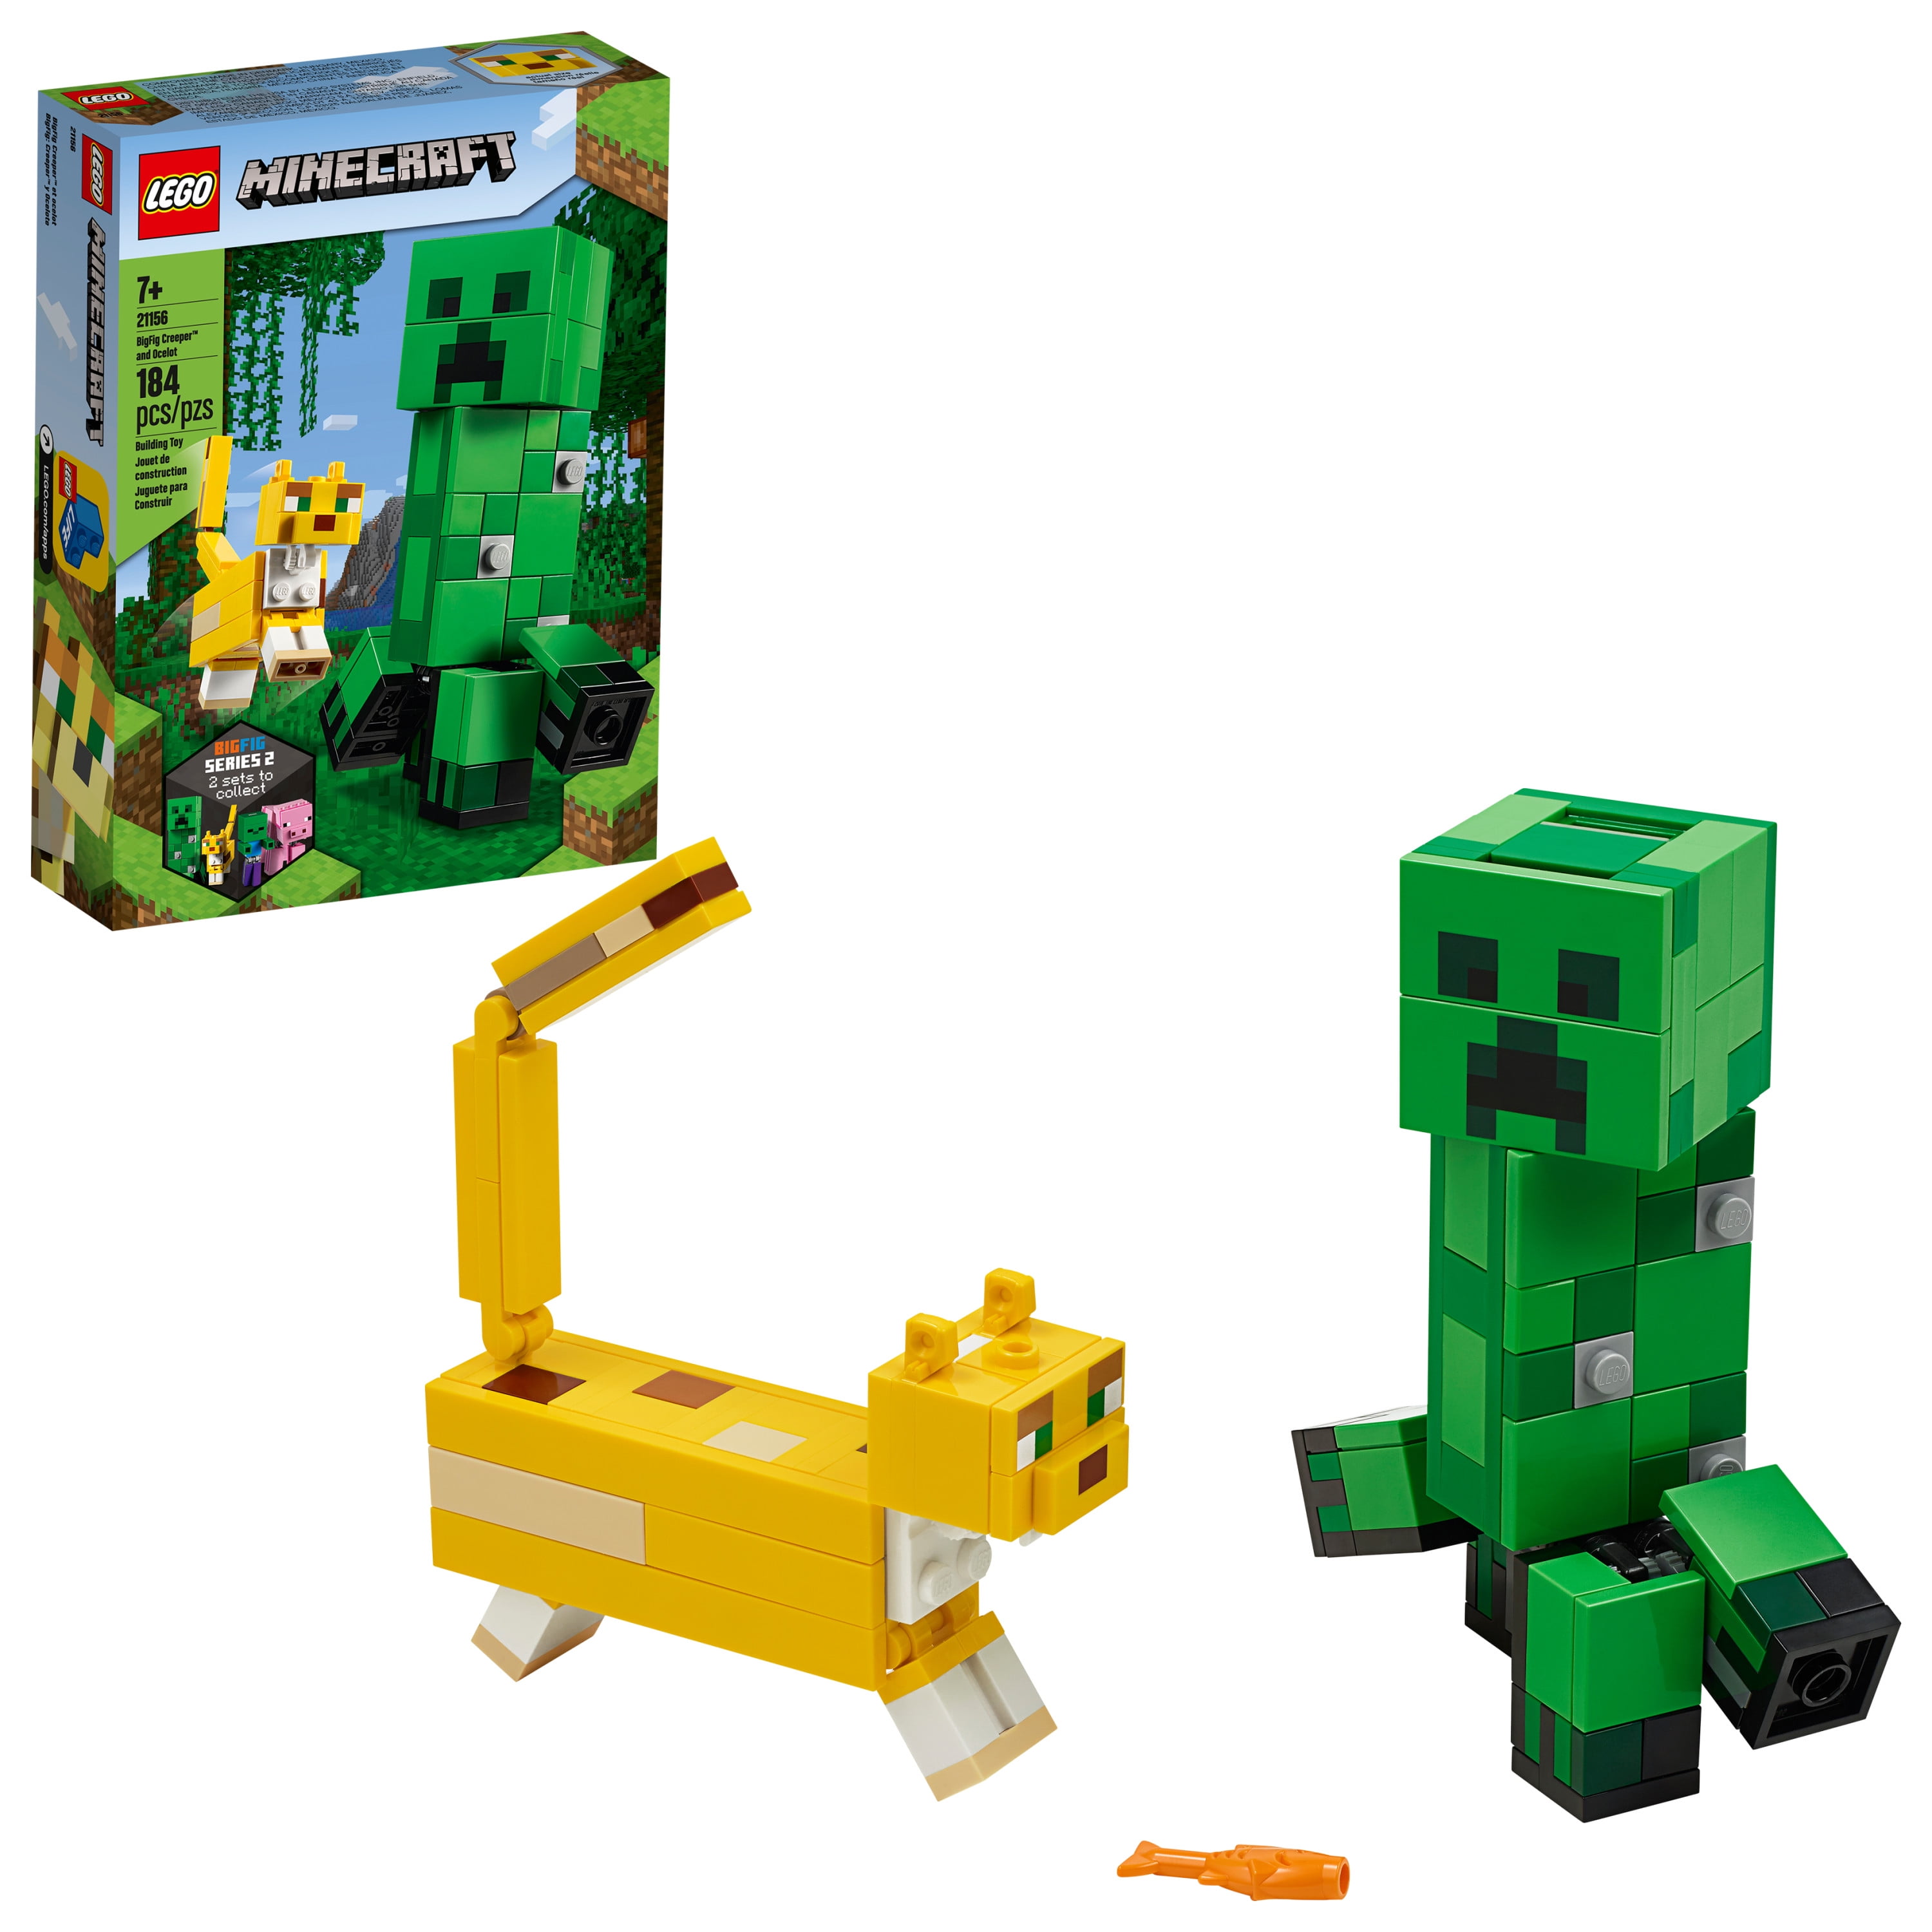 *BRAND NEW* Lego Minecraft Set #21156 BigFig Creeper with Ocelot Big Fig